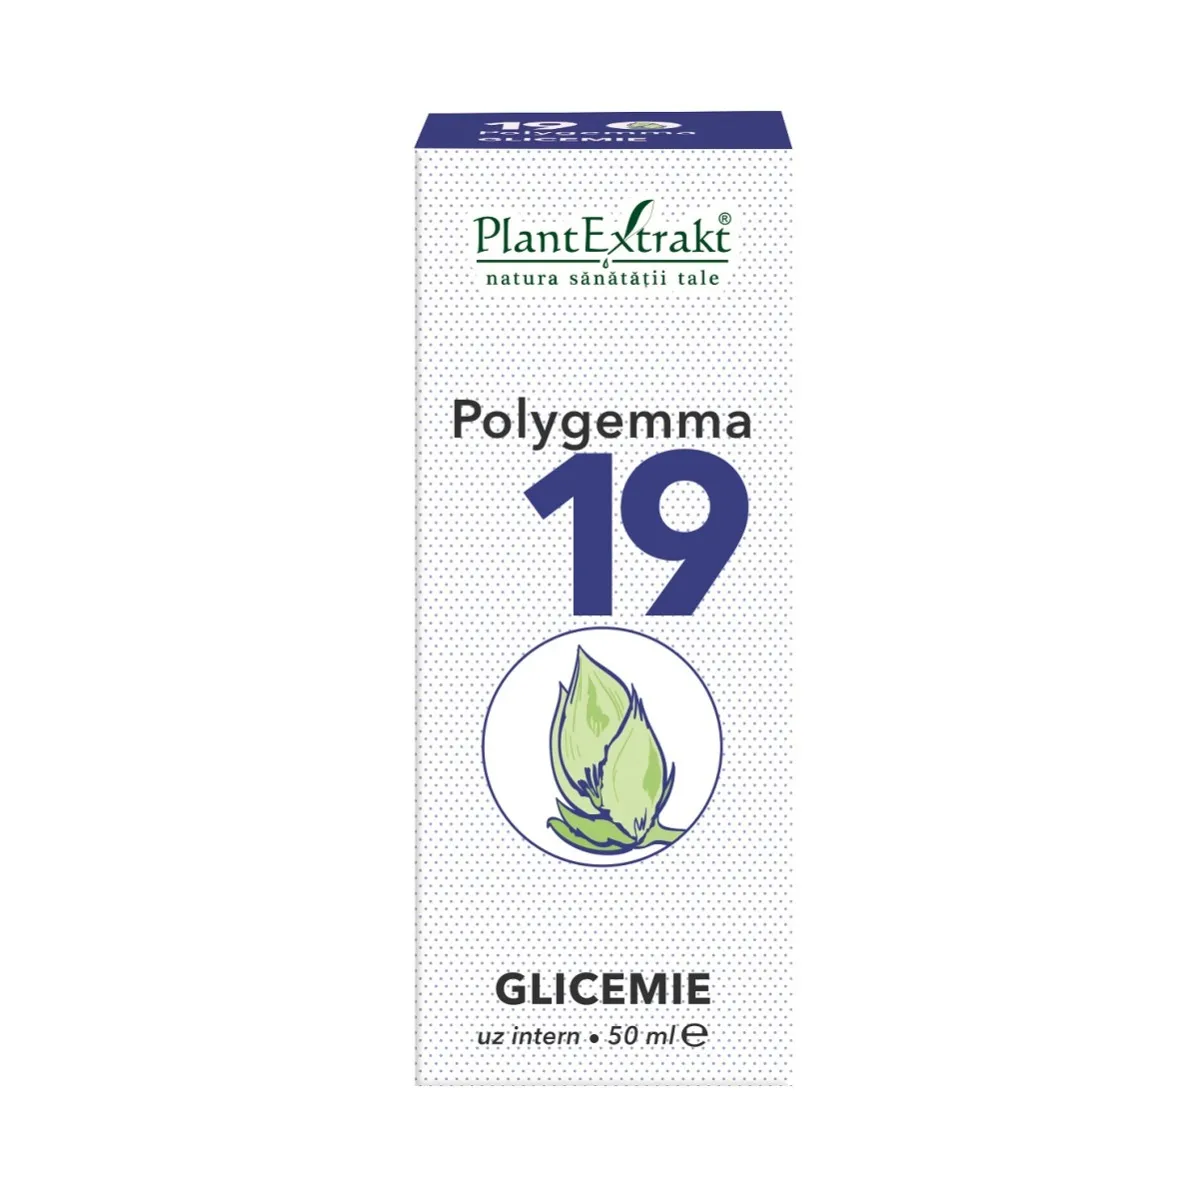 Polygemma 19, glicemie, 50ml, Plant Extrakt